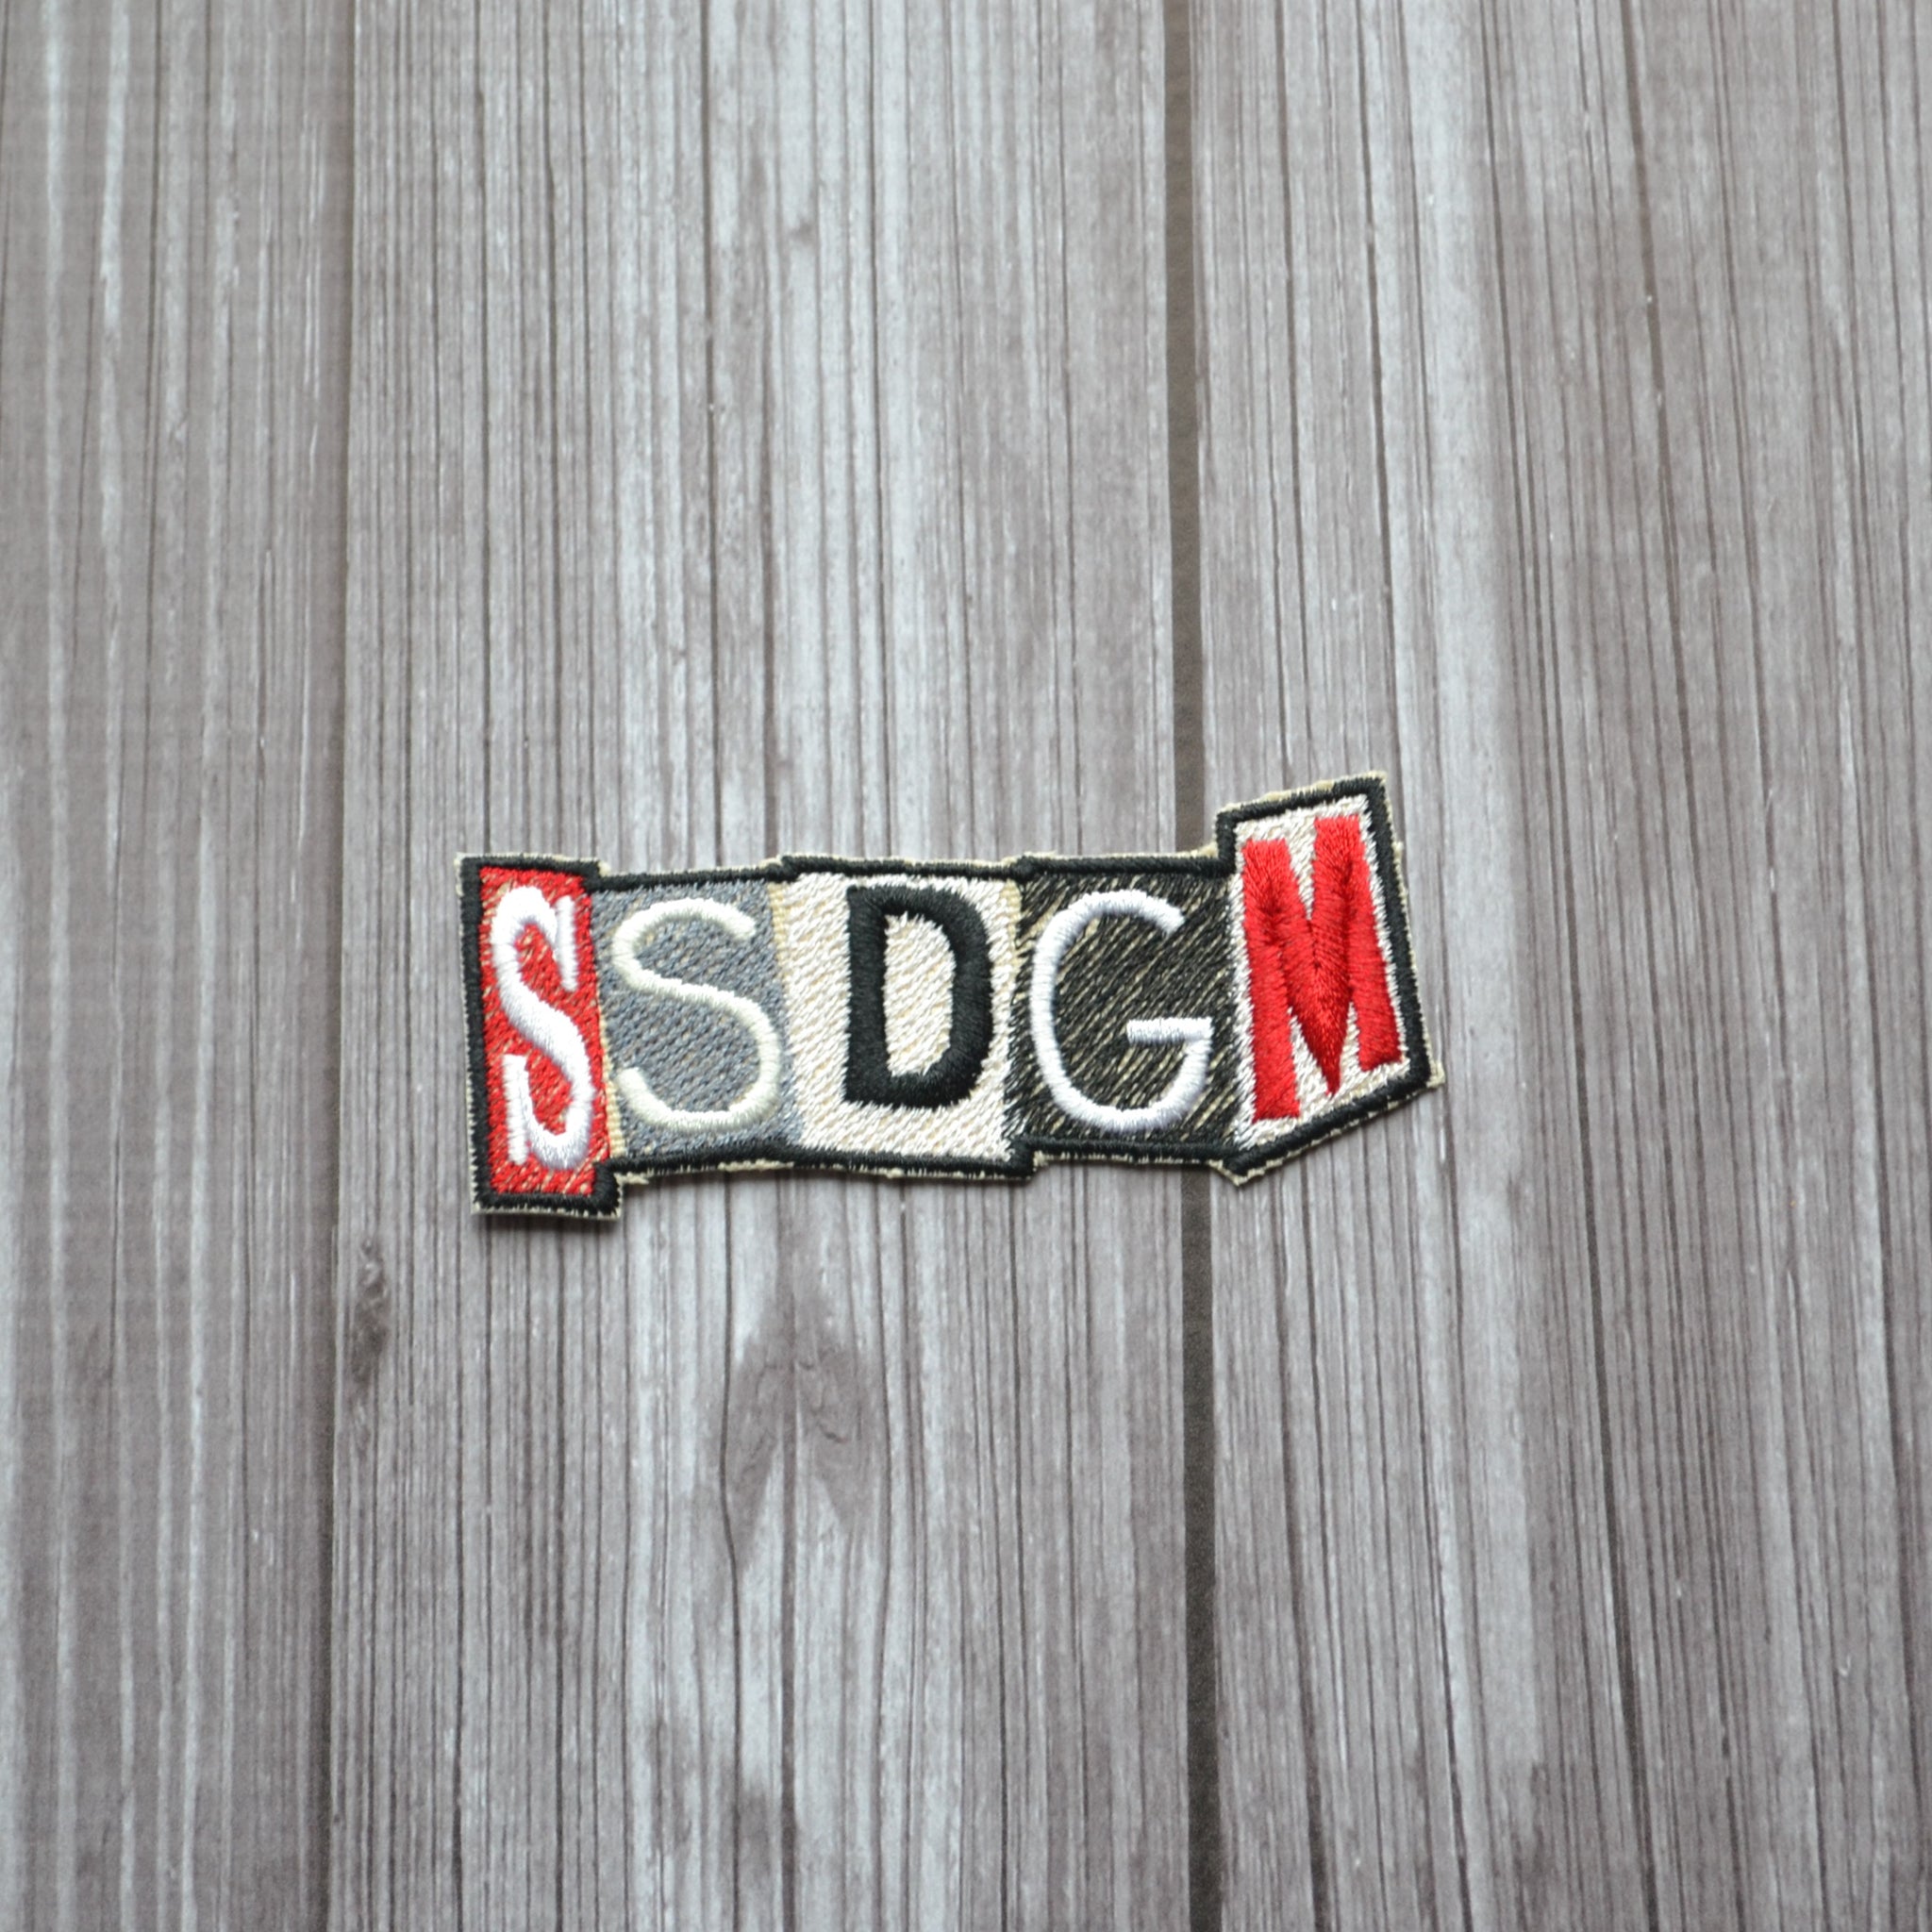 SALE! - SSDGM - Iron-on Patch - 3.8 inch